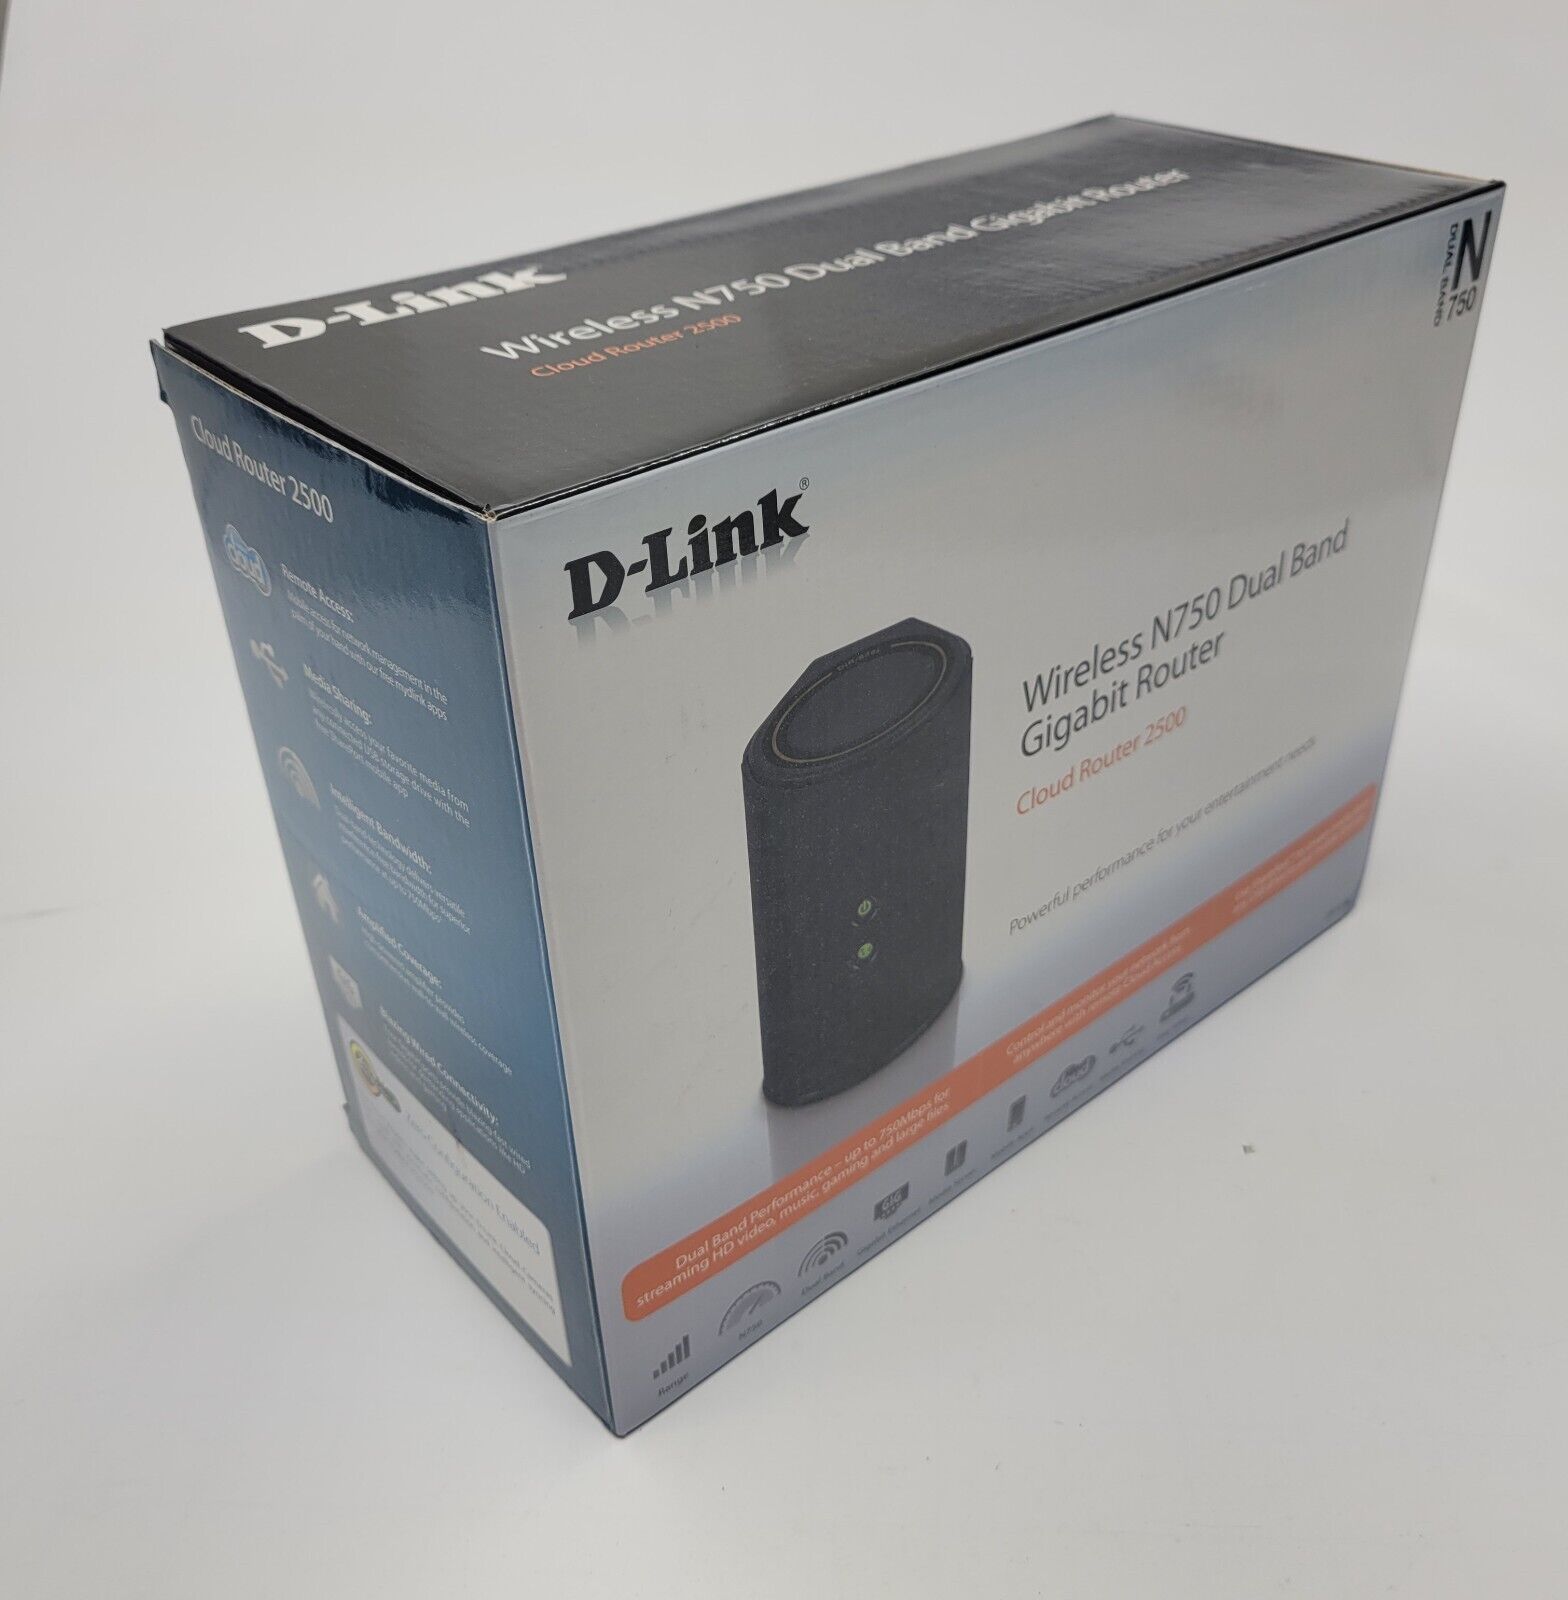 D-link DIR-836L N750 Dual Band Gbe Router - Cloud Router 2500